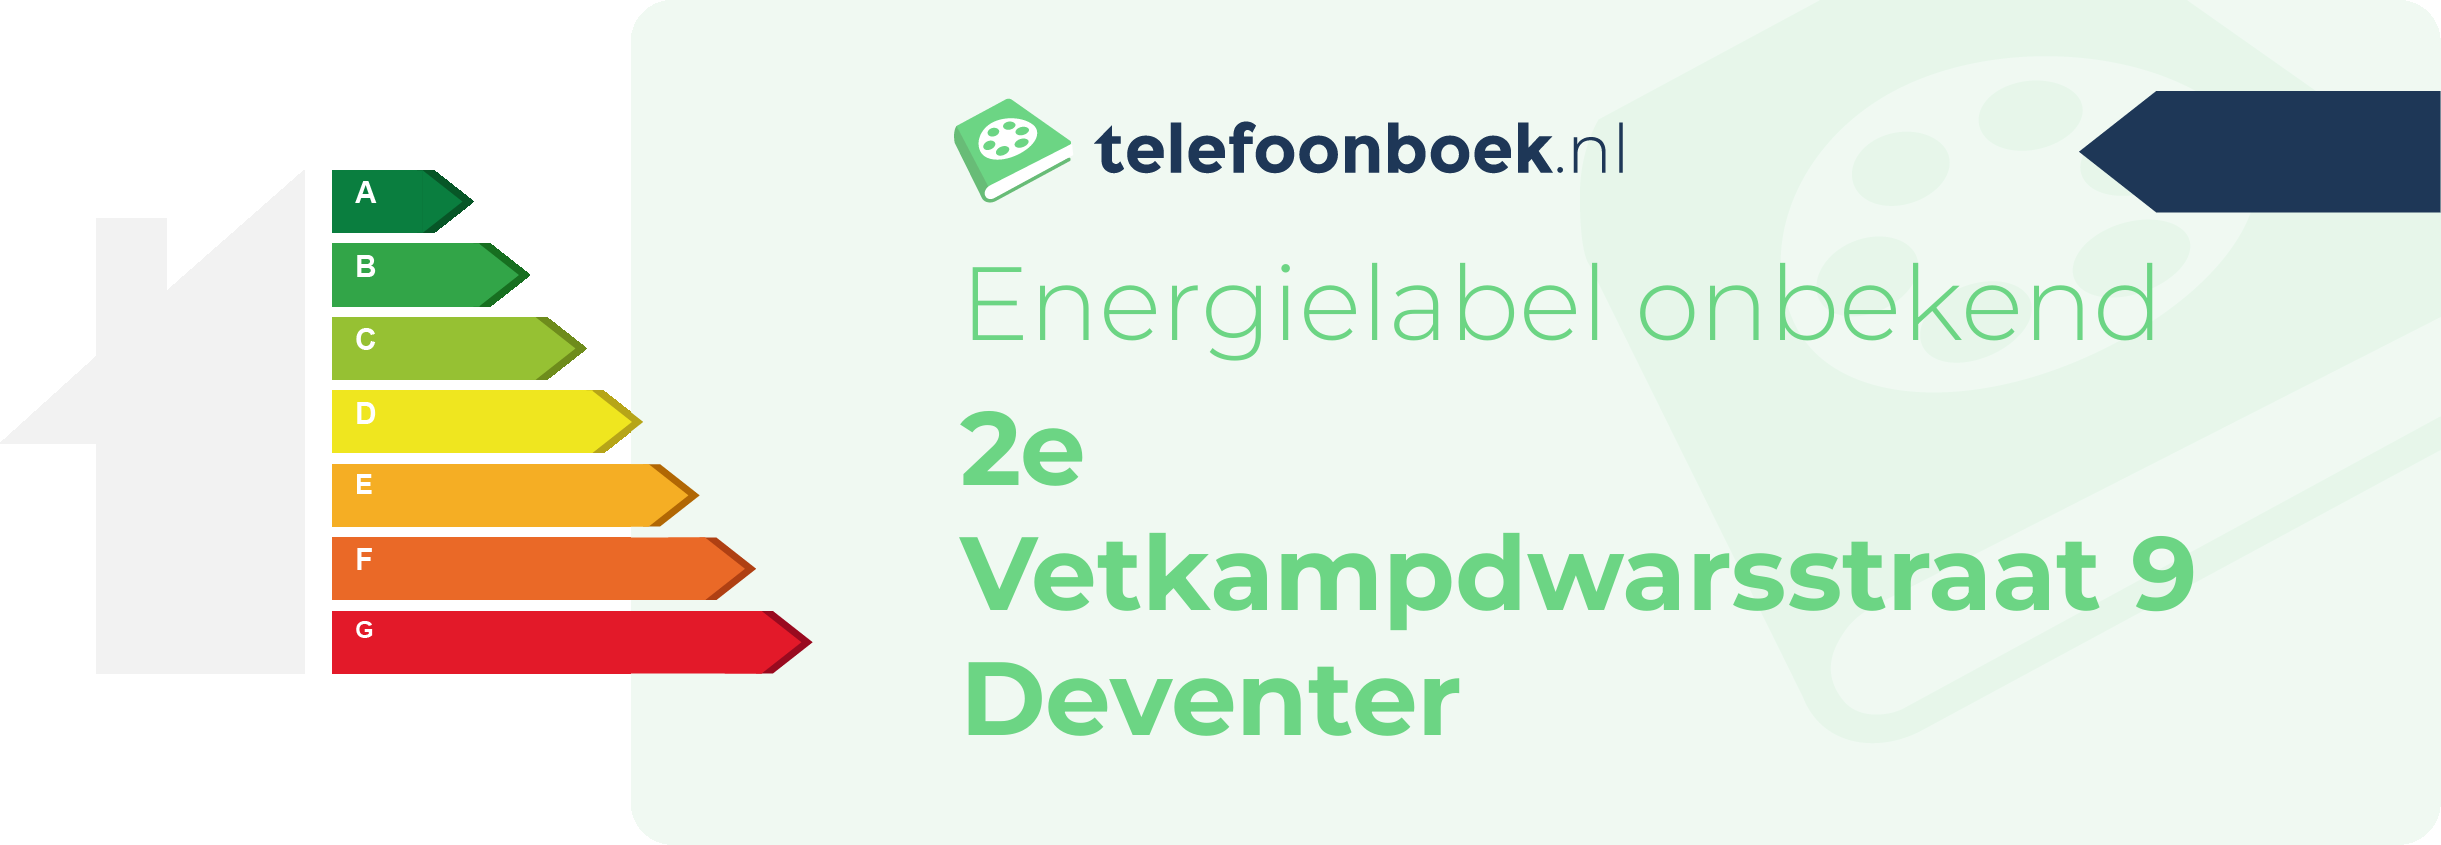 Energielabel 2e Vetkampdwarsstraat 9 Deventer